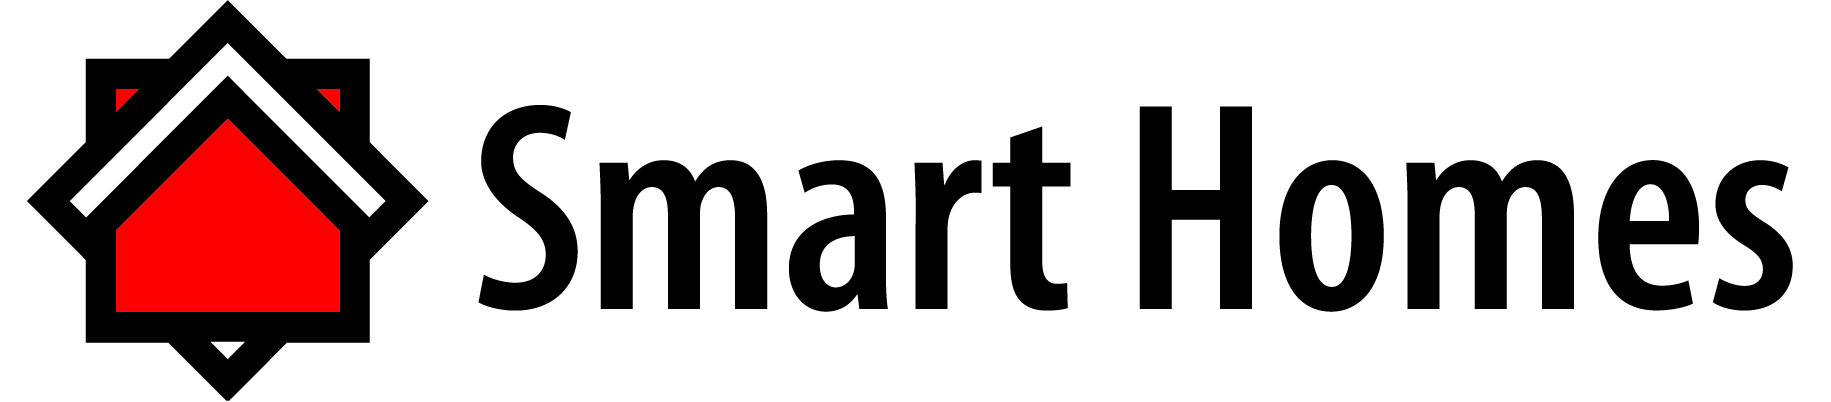 Smart Service Logo photo - 1